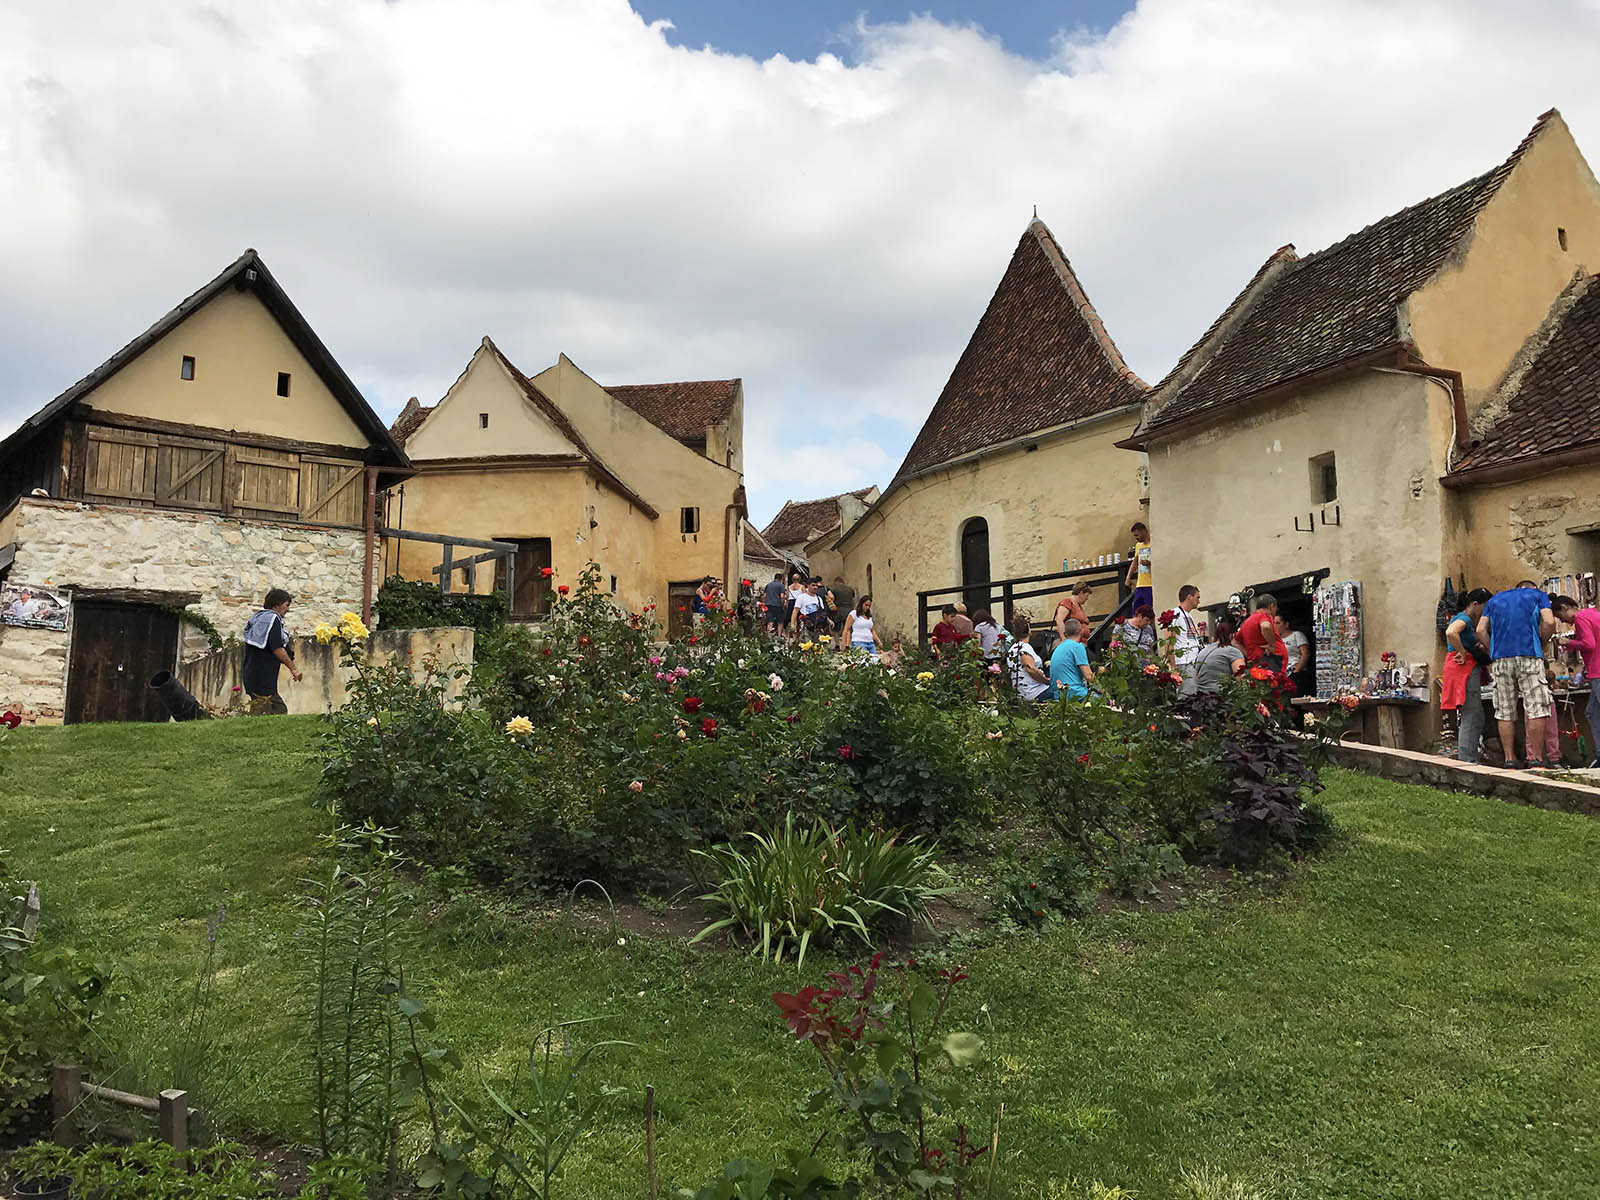 The interior courtyard of Rasnov Fortress hosts enchanting medieval tile-roofed houses. Credit: Carolina Valenzuela